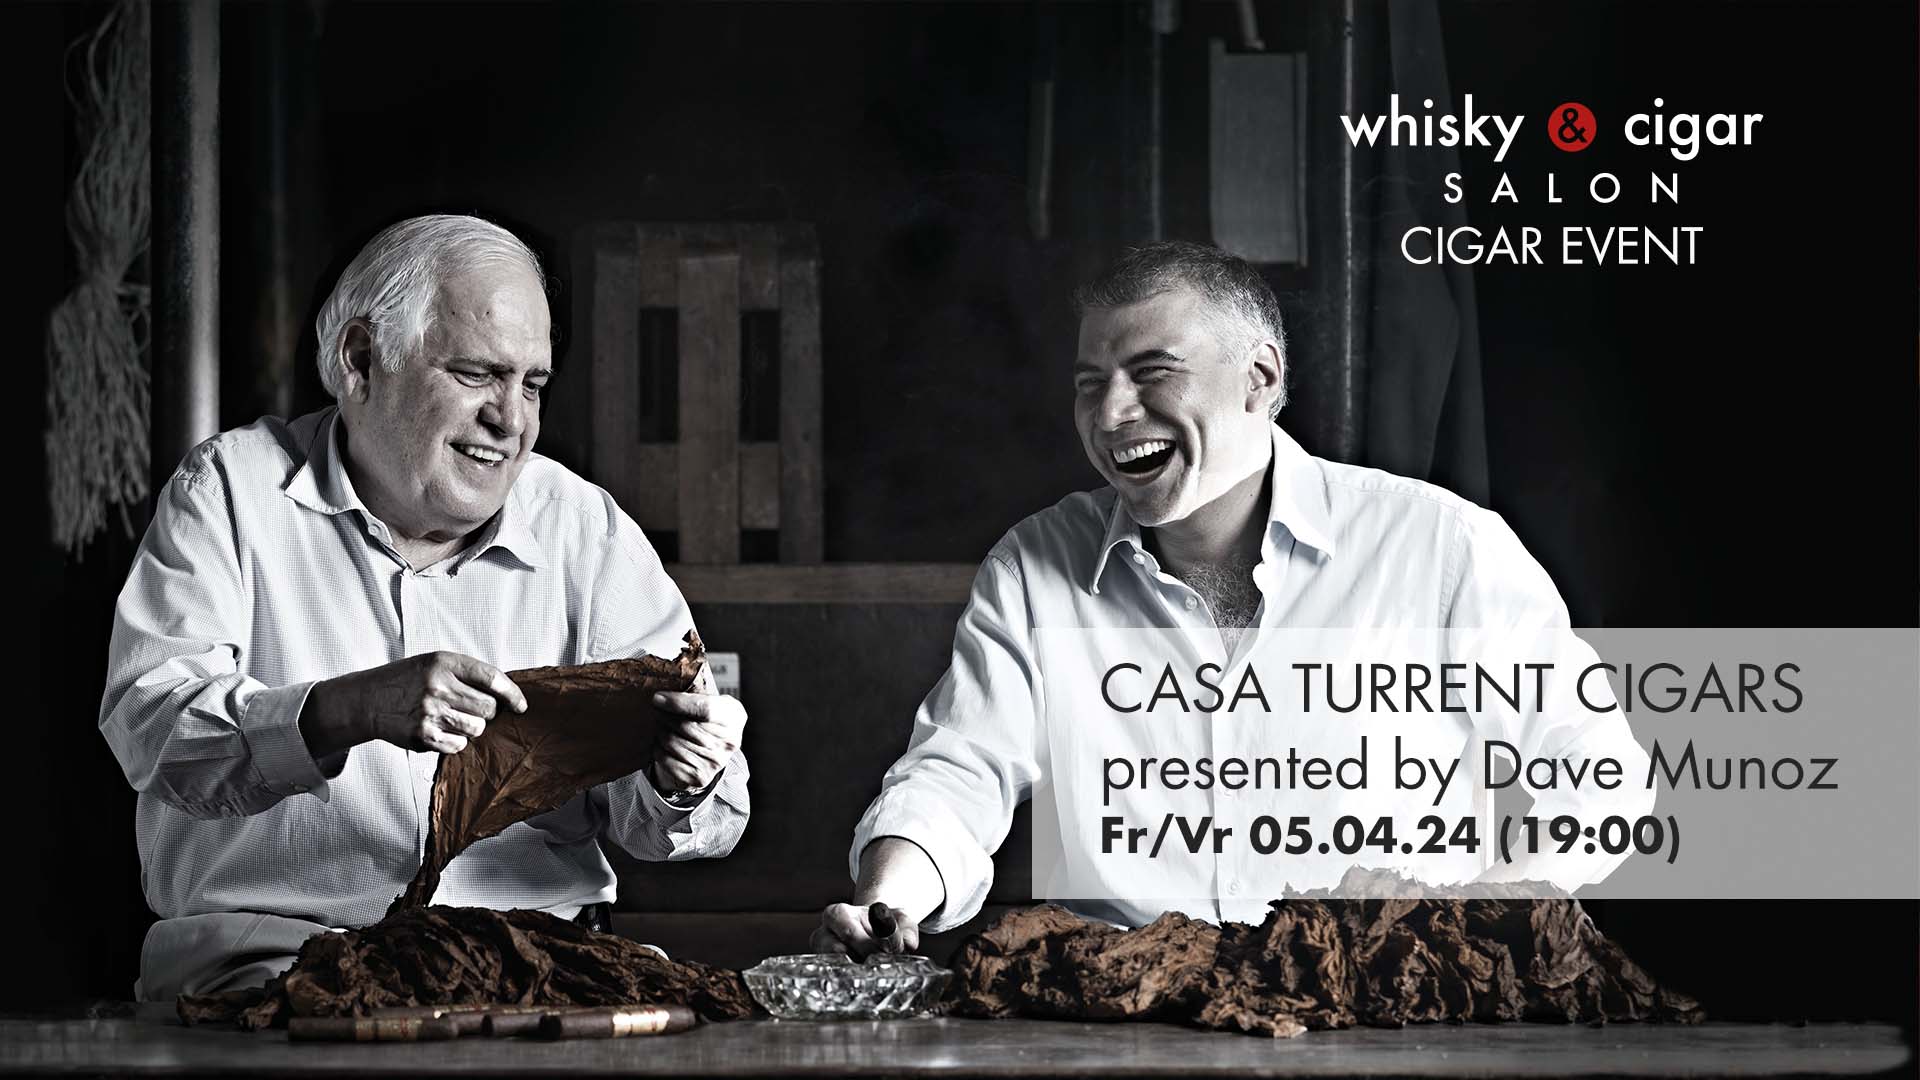 Zigarren-Event mit Casa Turrent Cigars Ankündigung